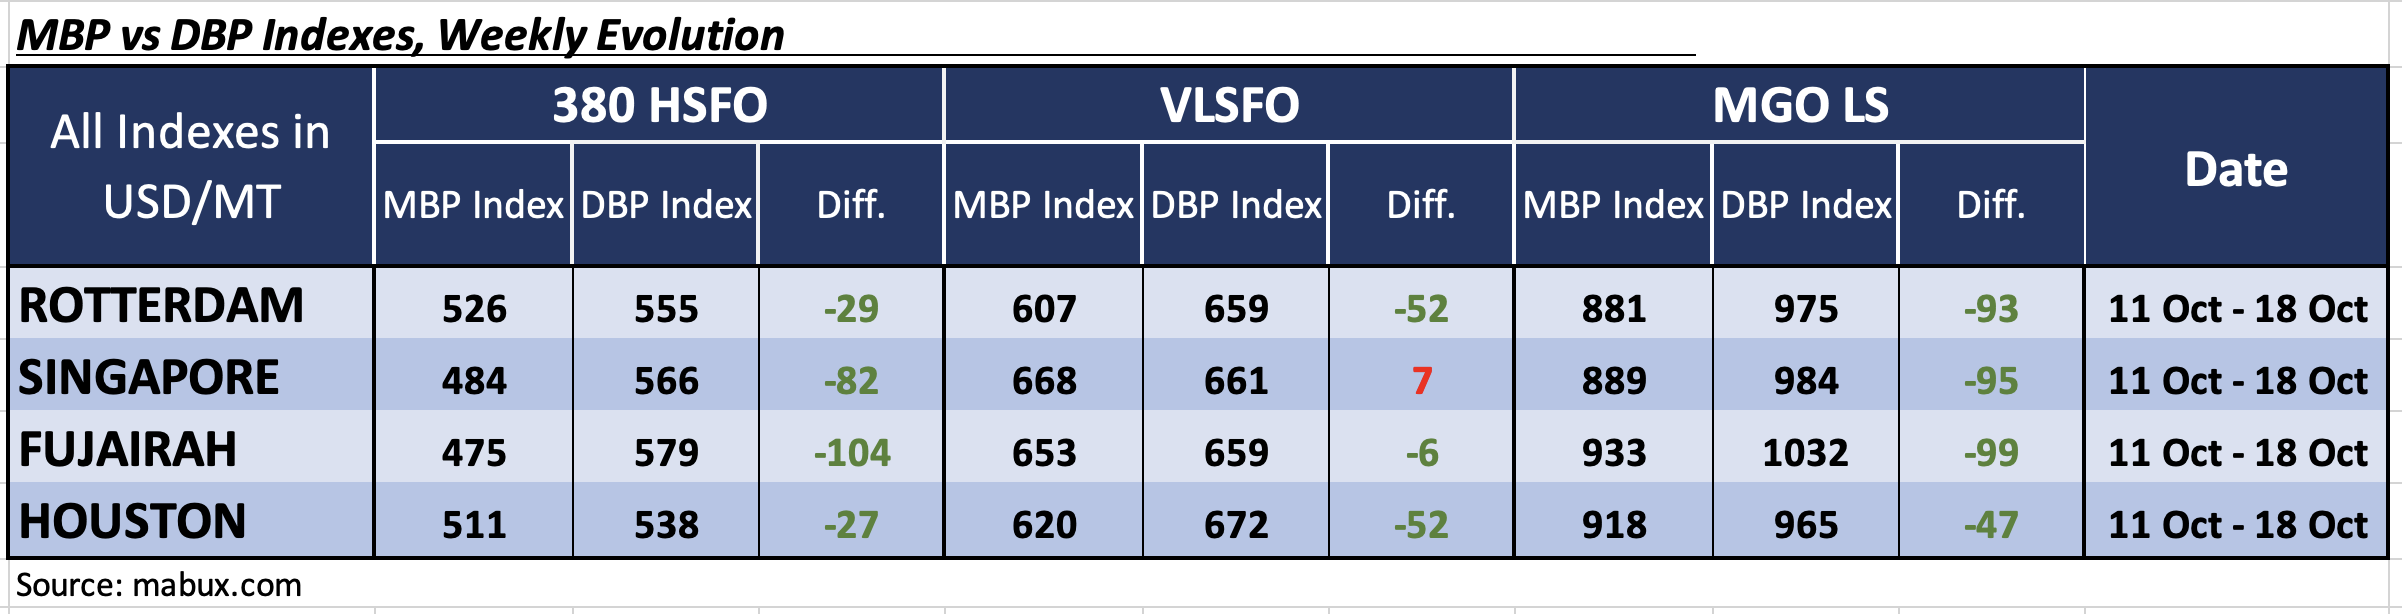 MBP vs DBP indexes 